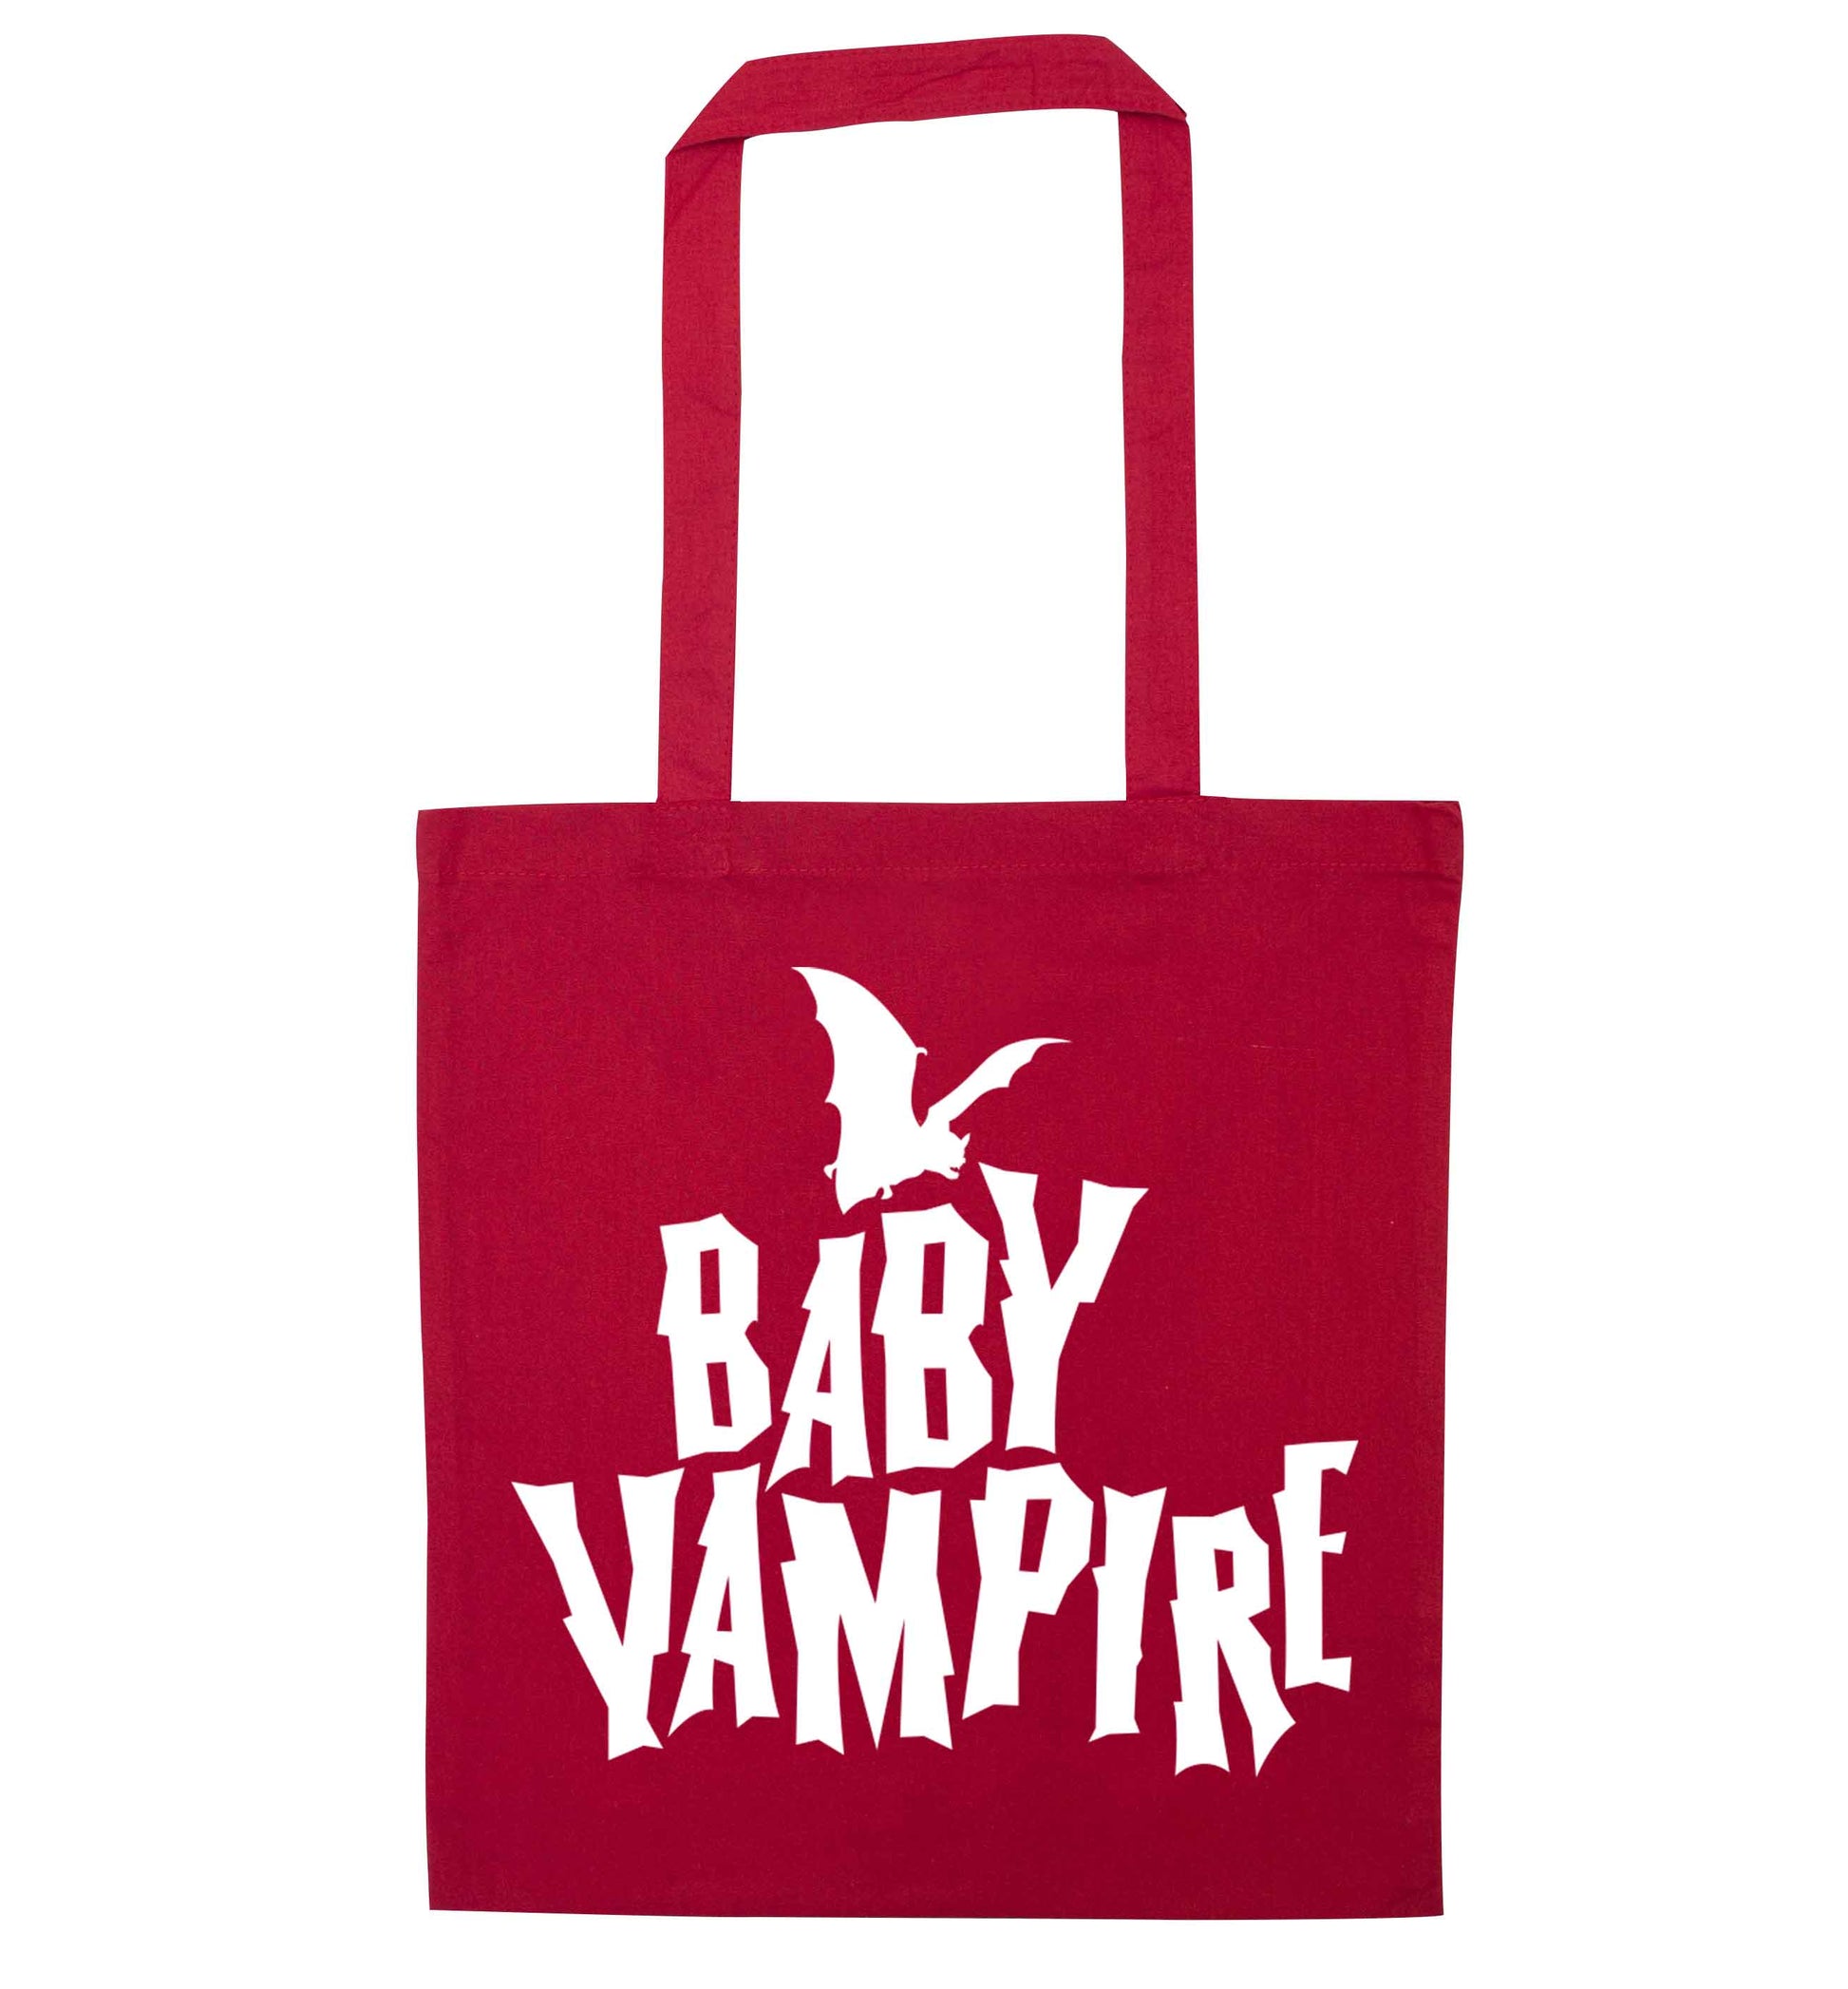 Baby vampire red tote bag